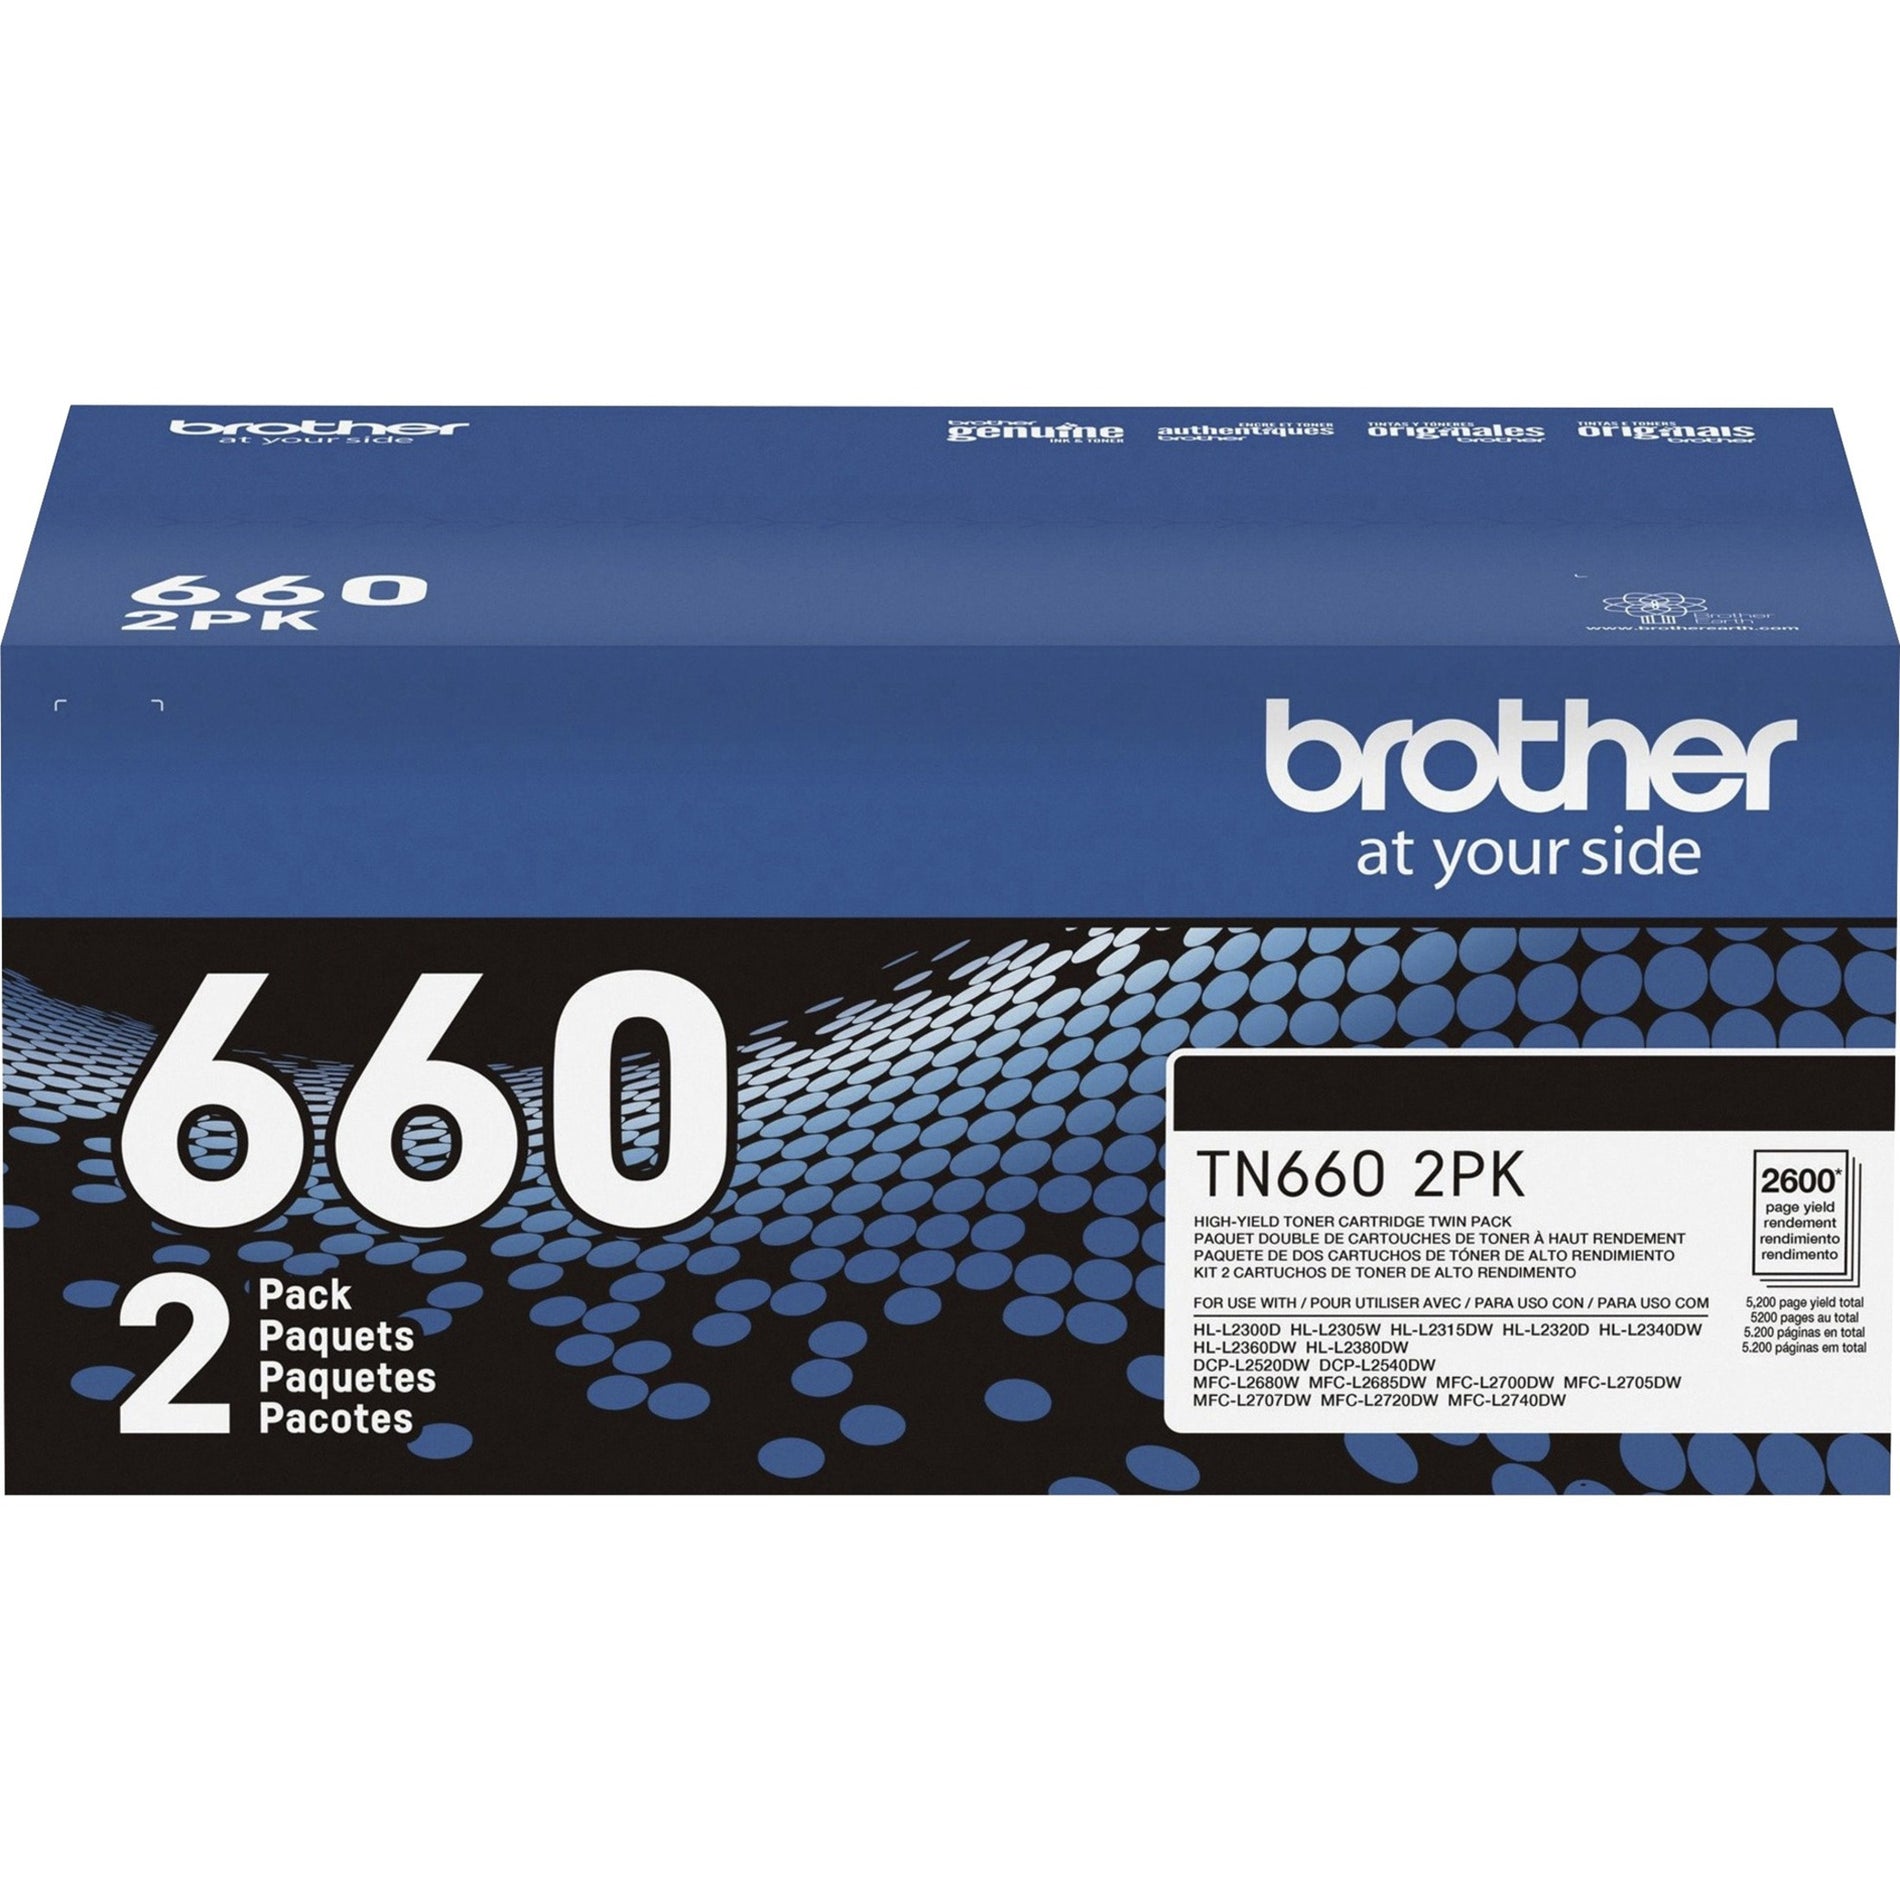 Brother TN660 2PK Original Toner Cartridge High Yield 2600 Pages Black